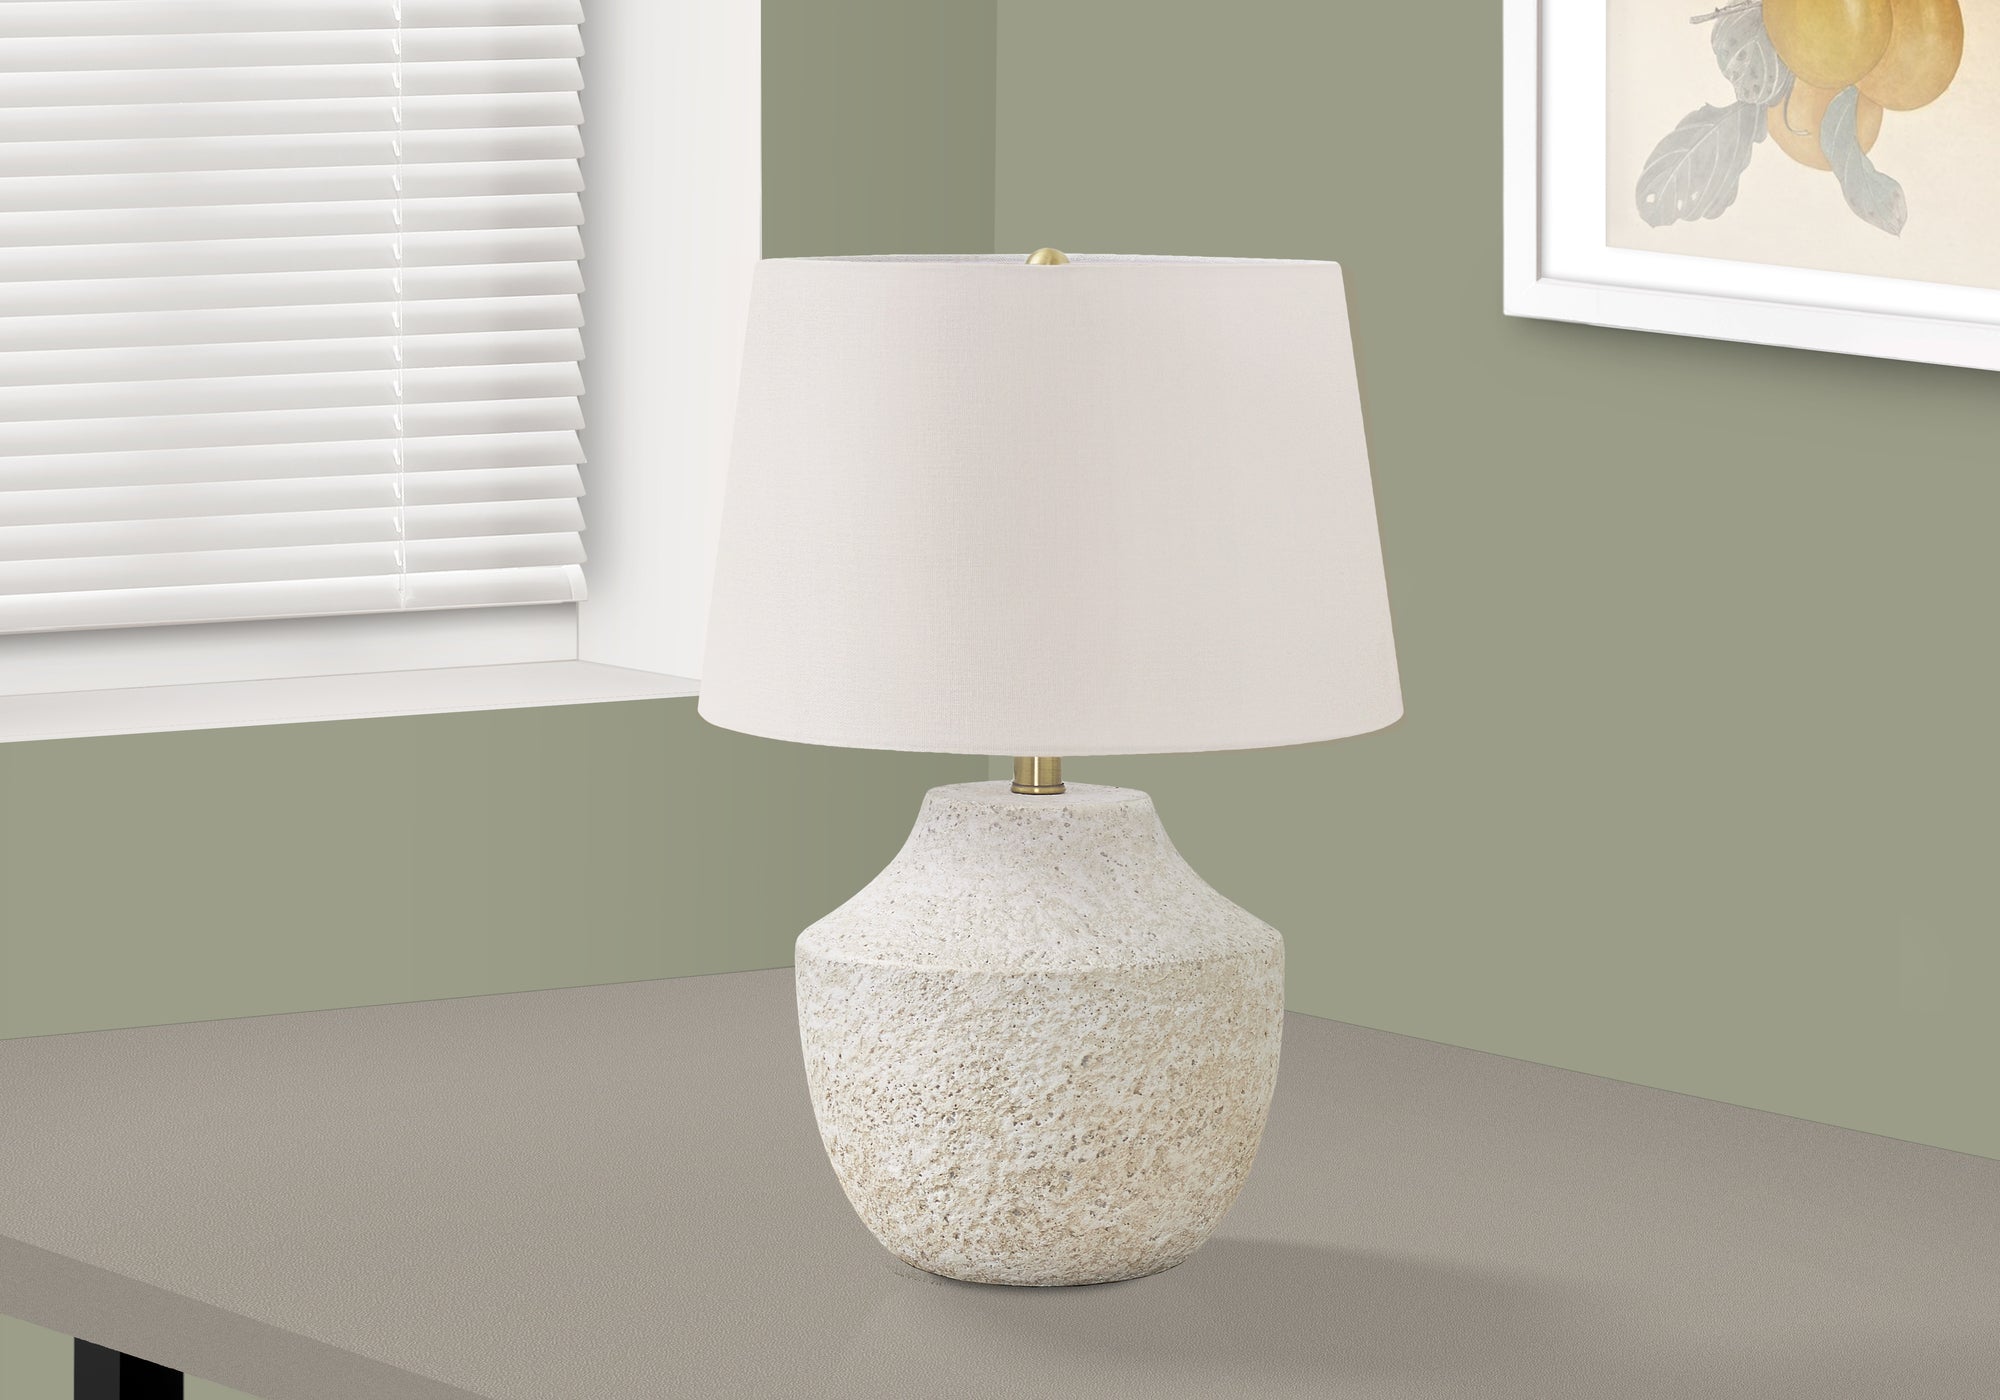 MN-639729    Lighting, 20"H, Table Lamp, Cream Concrete, Ivory / Cream Shade, Modern